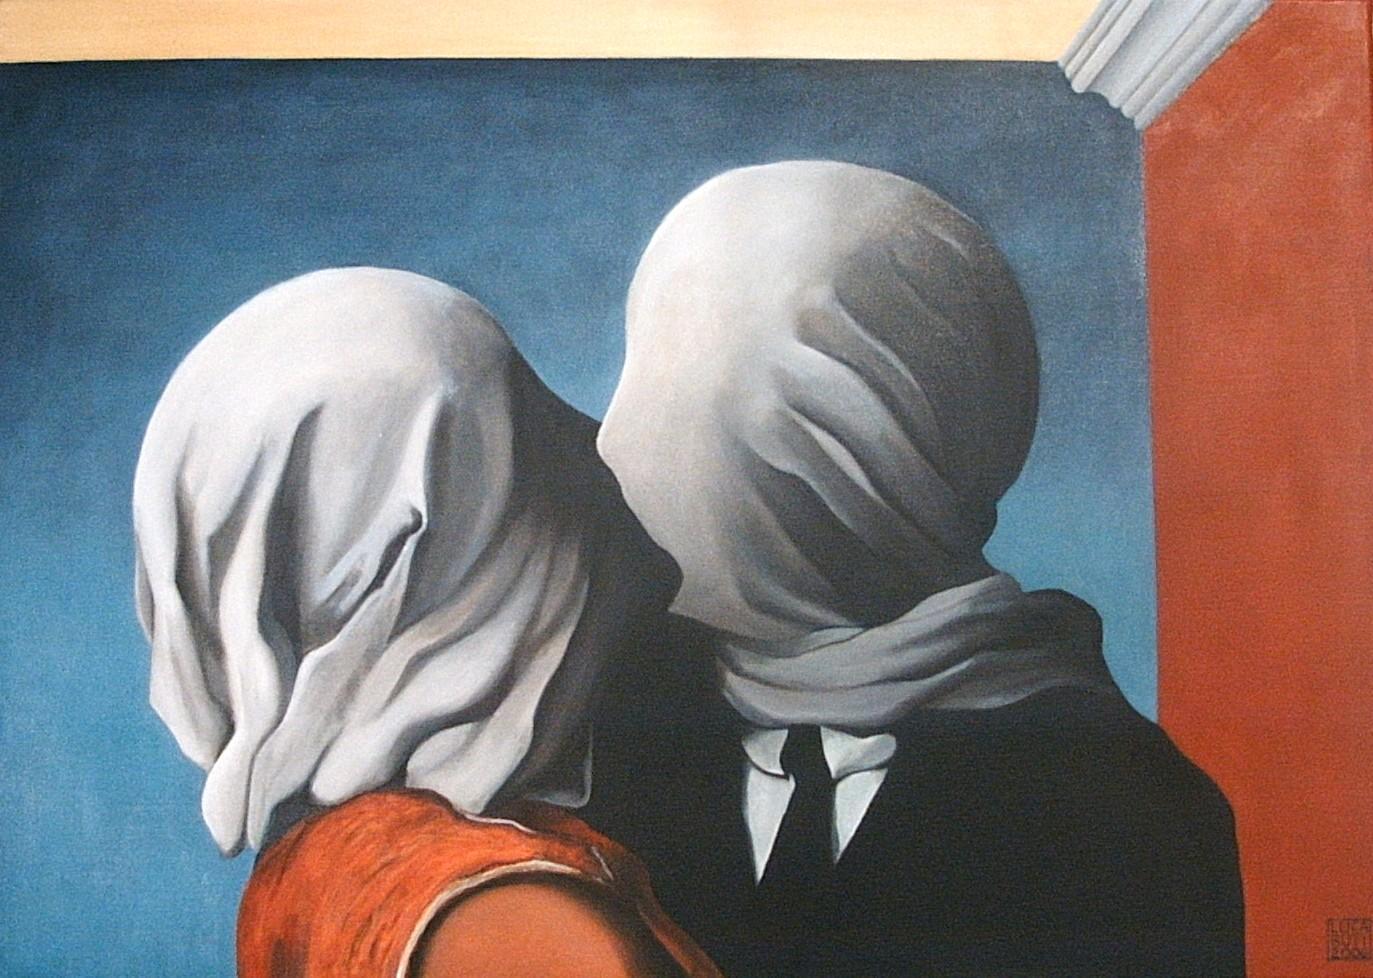 عشّاق - رنه ماگریت - The Lovers - Rene Magritte